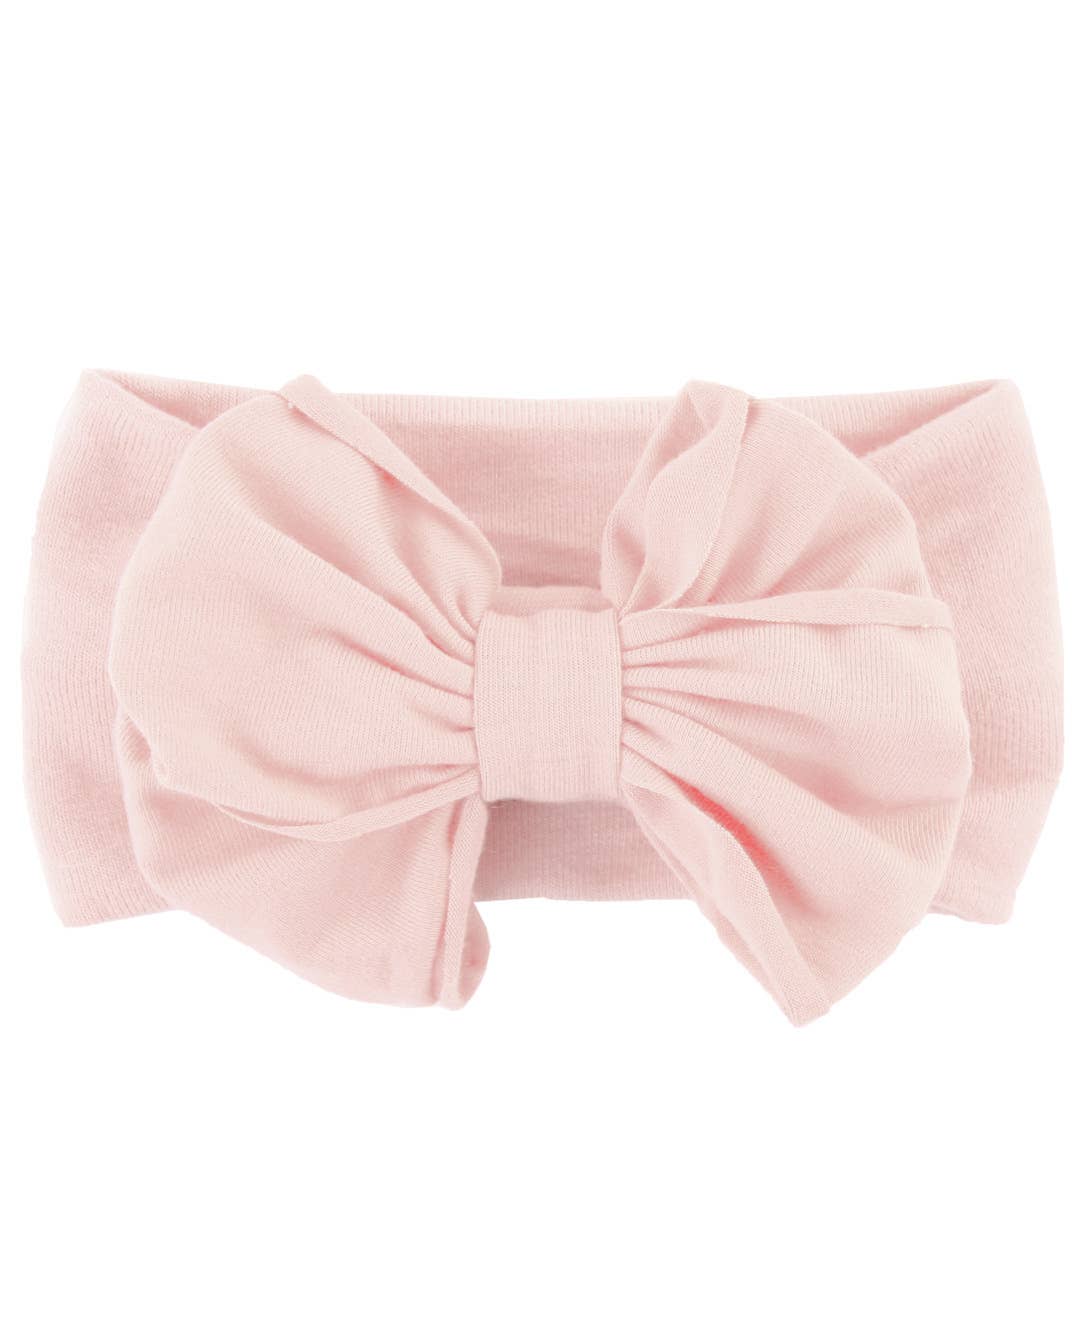 RuffleButts - Ballet Pink Big Bow Headband